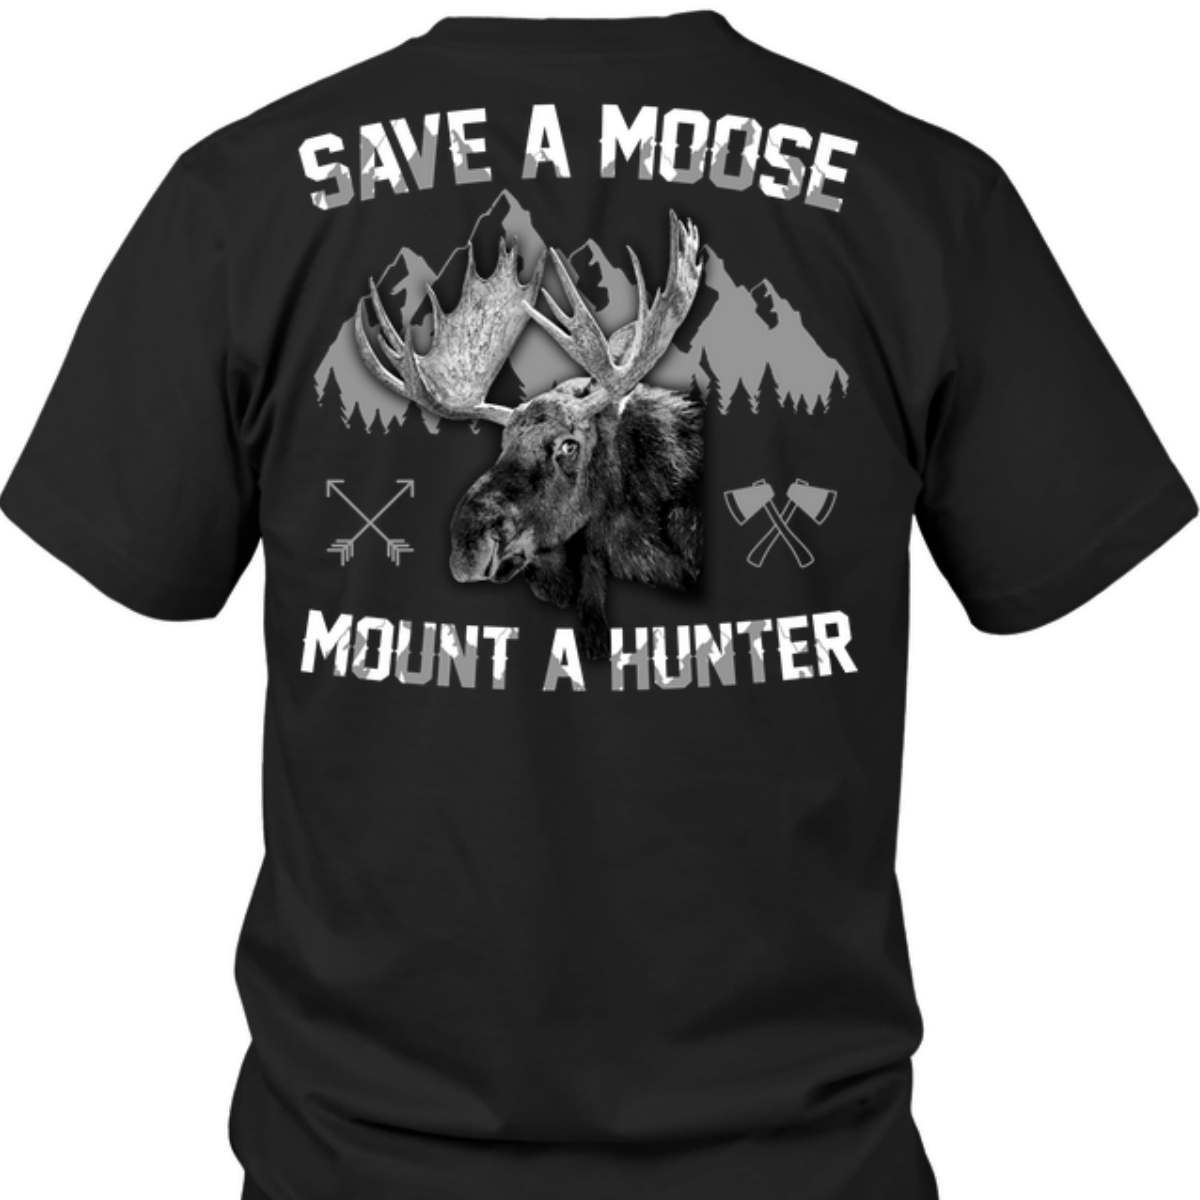 Moose Hunter - Save a moose mount a hunter